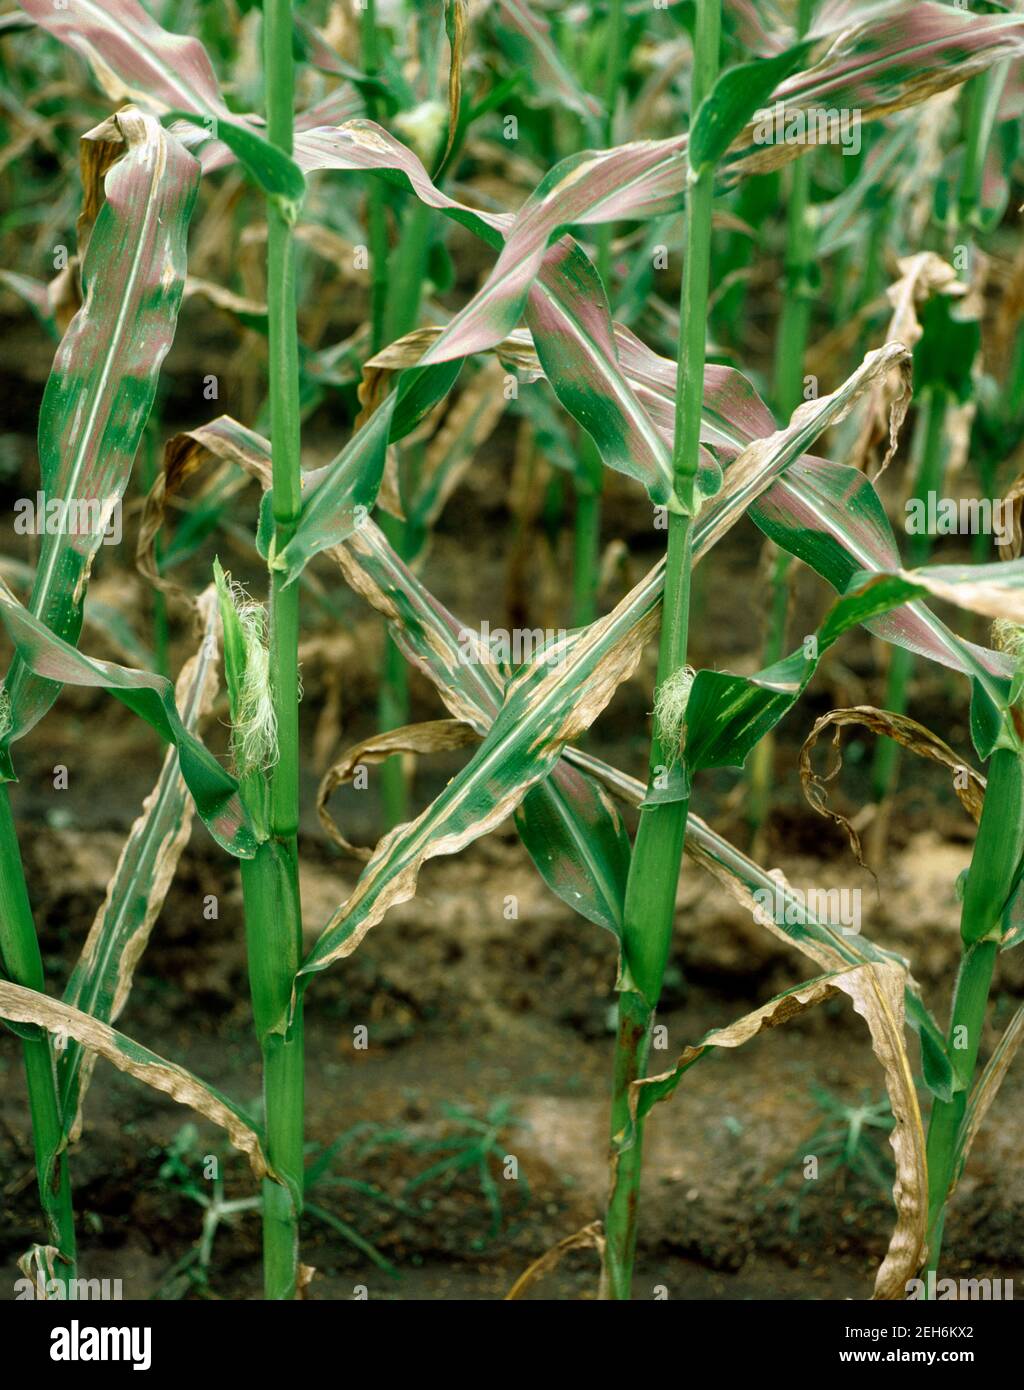 Northern corn leaf blight (Setosphaeria turcica) severe lesions on maize / corn crop,  Thailand Stock Photo